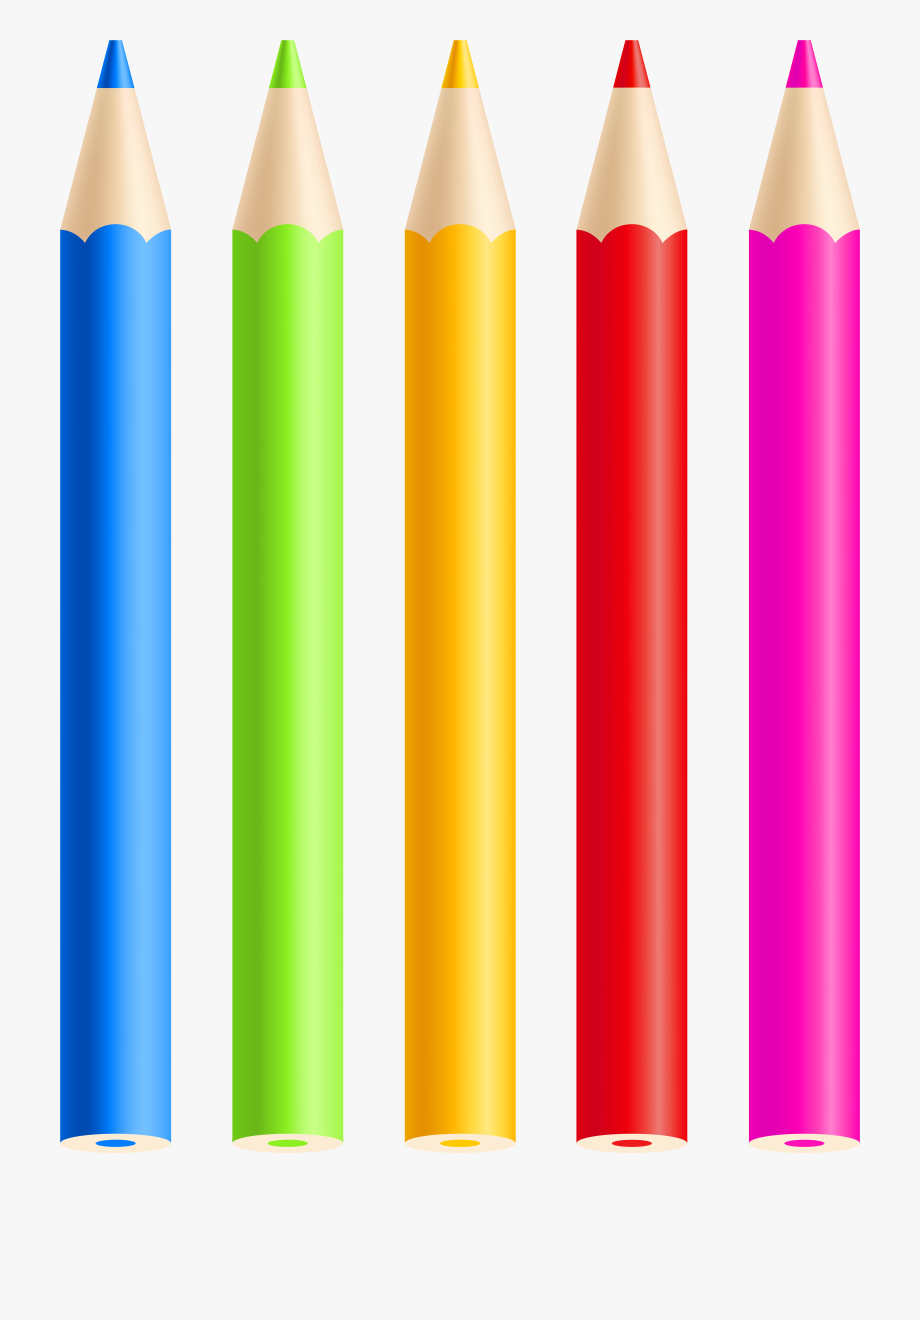 Colored pencils clipart.